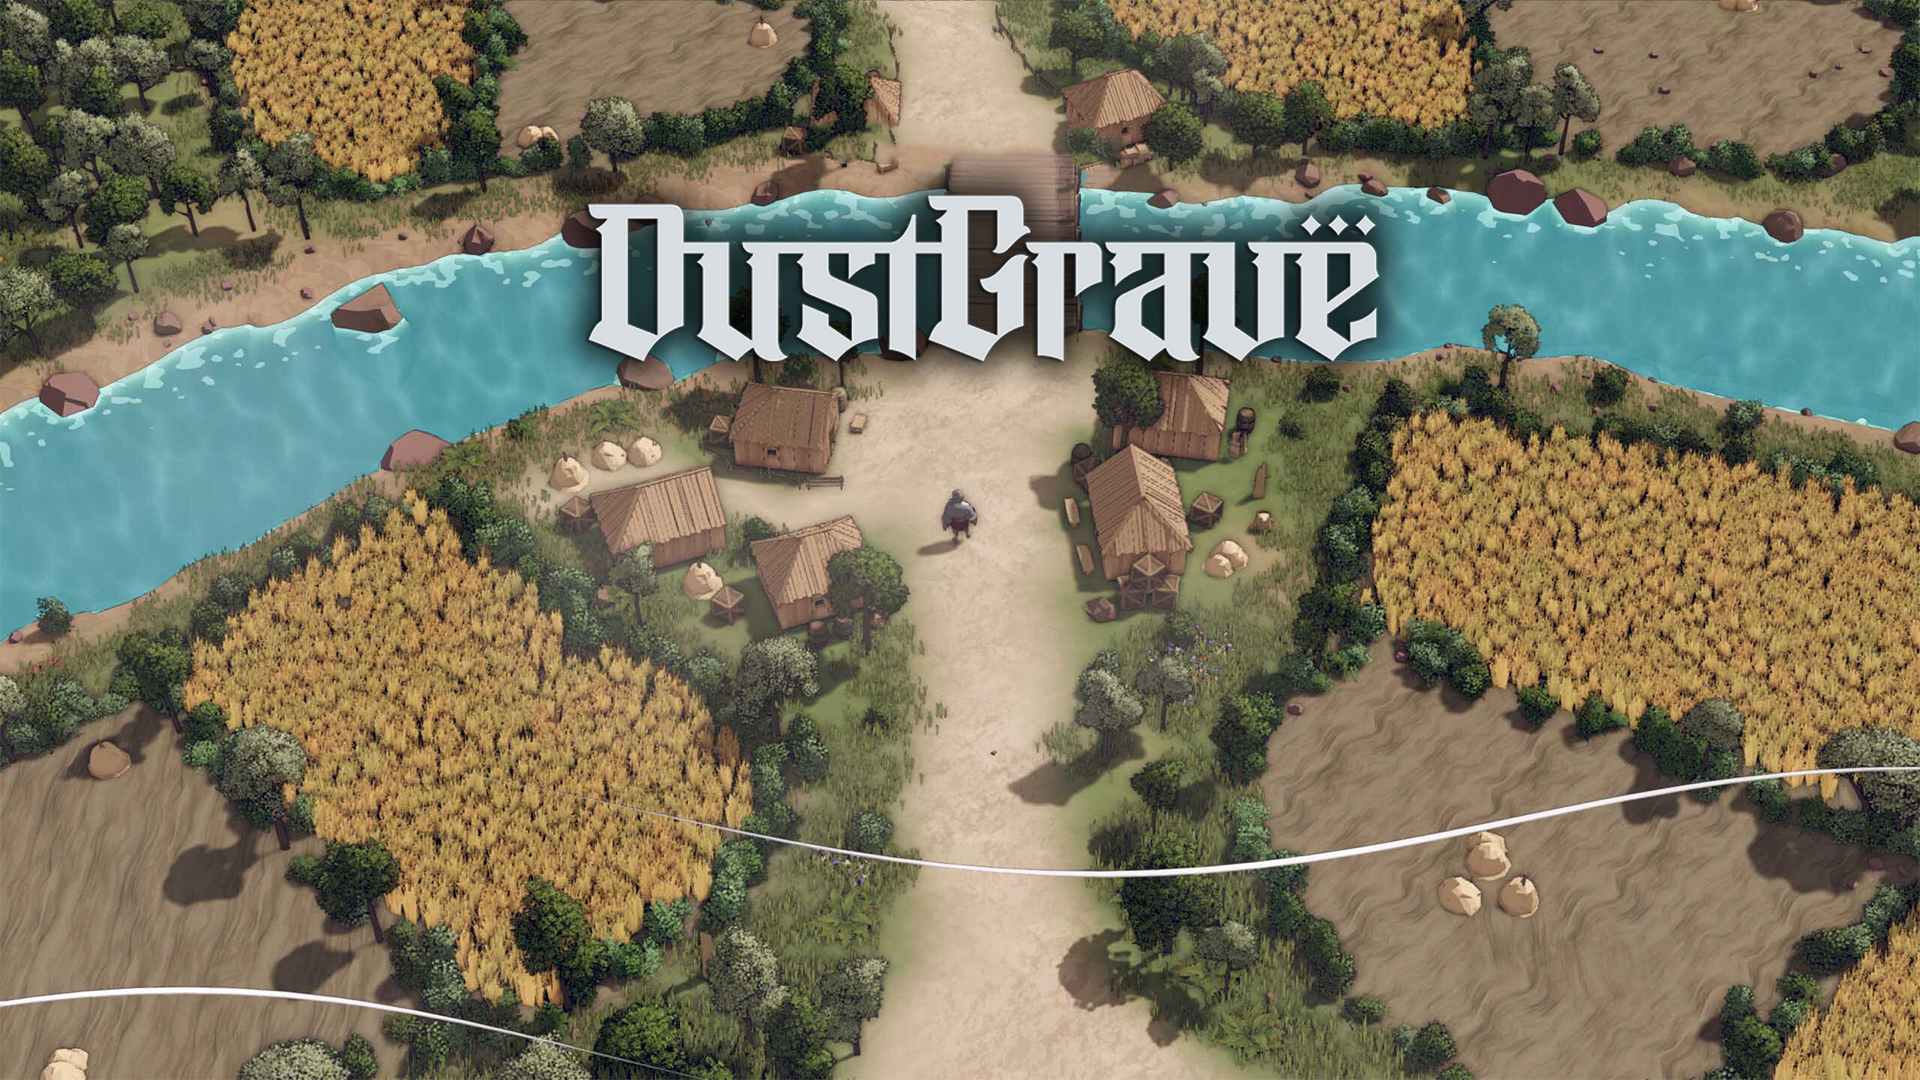 Dustgrave Dustgrave: A Sandbox RPG